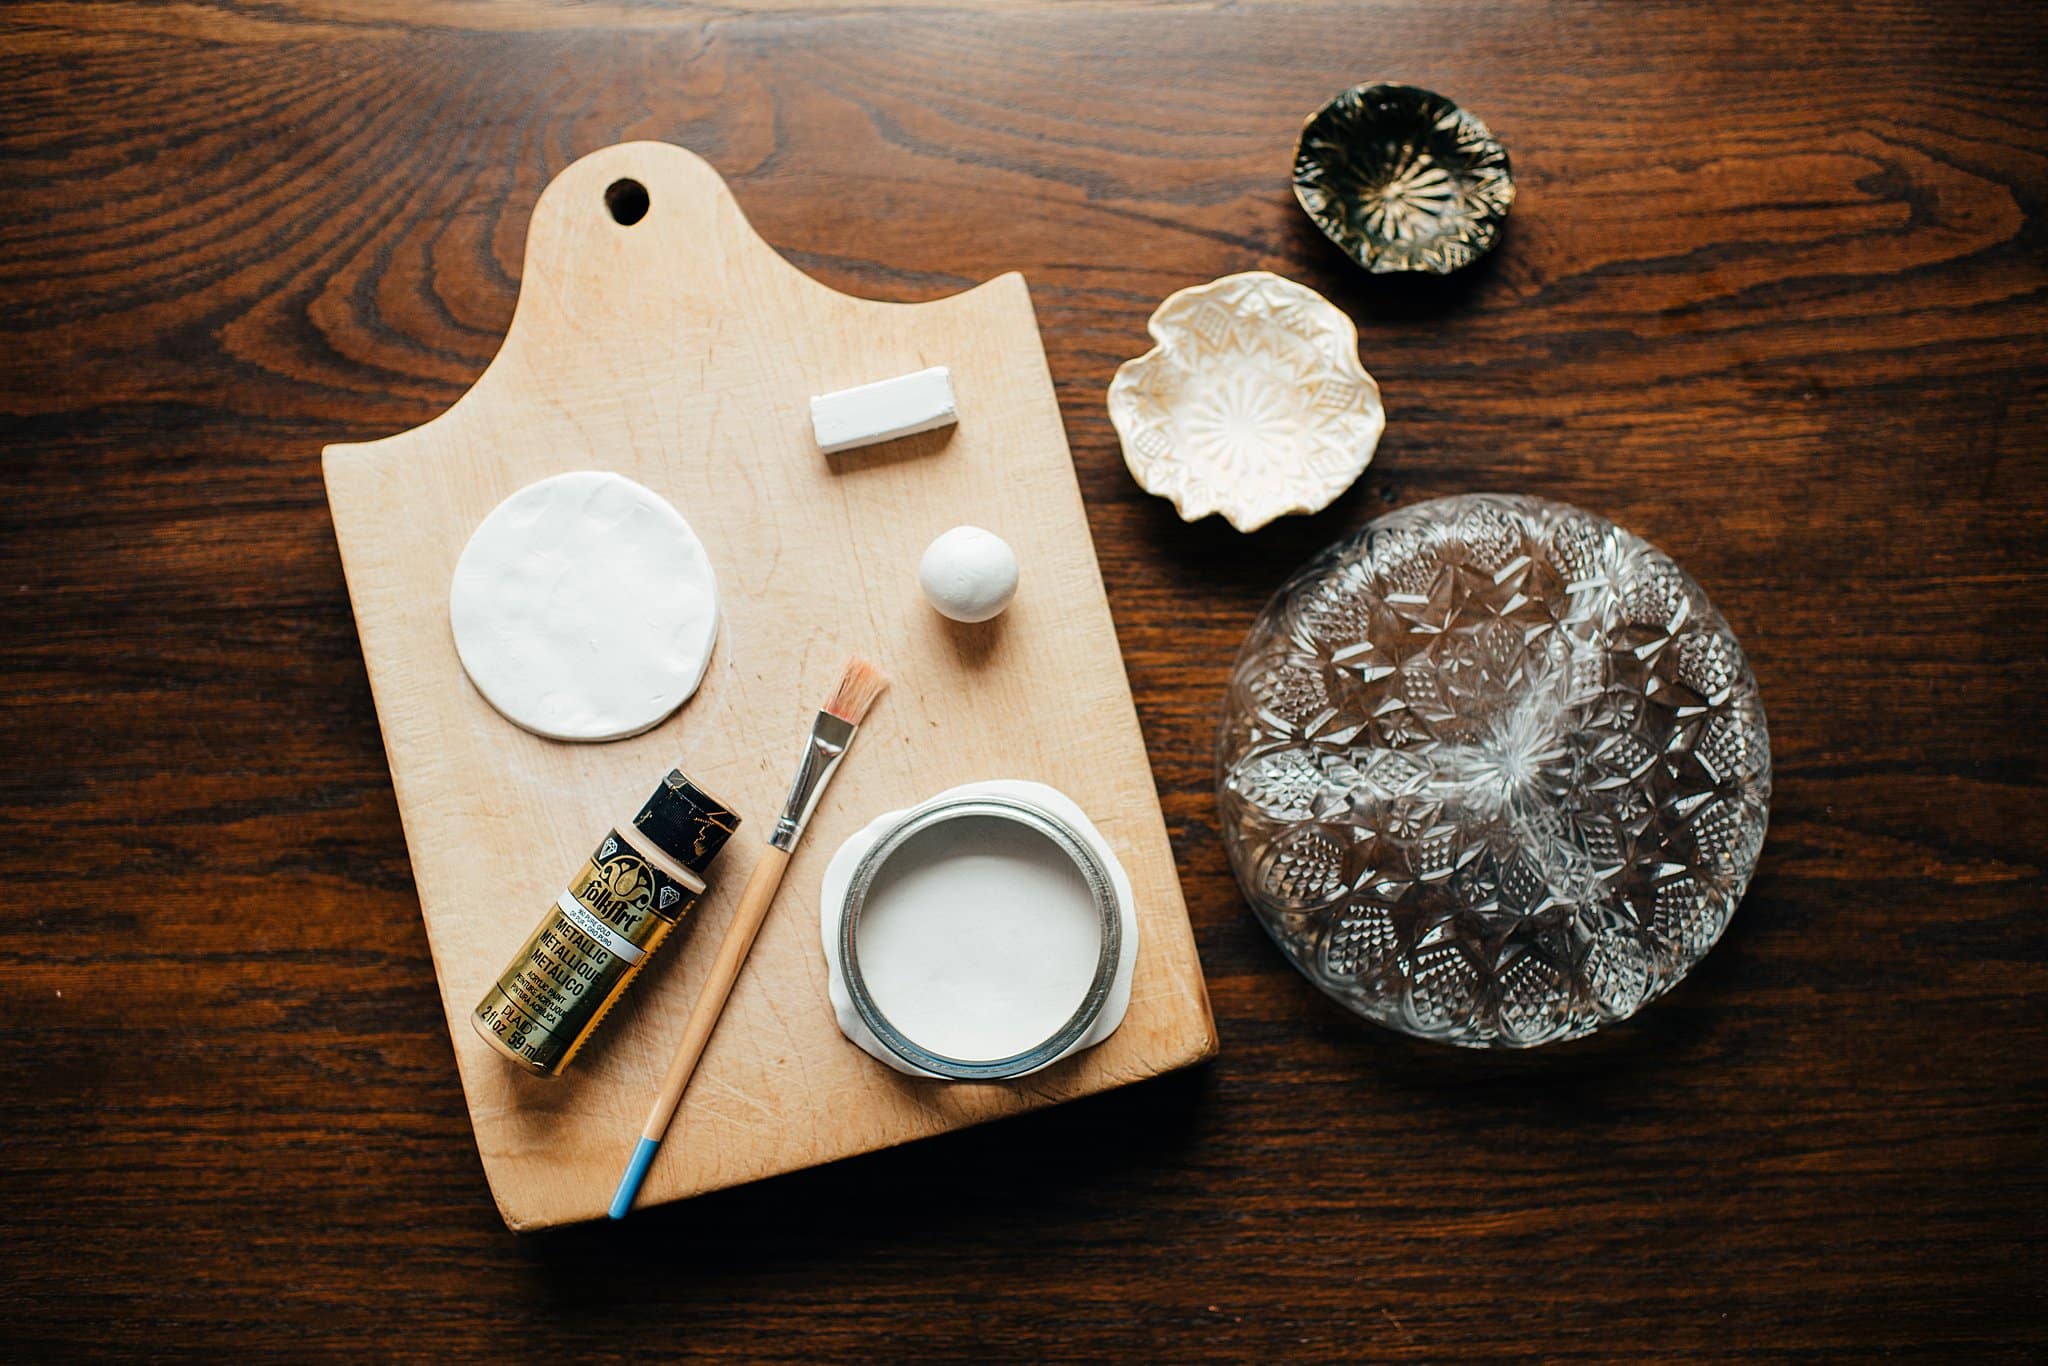 Supplies to Make a Custom Jewelry Dish